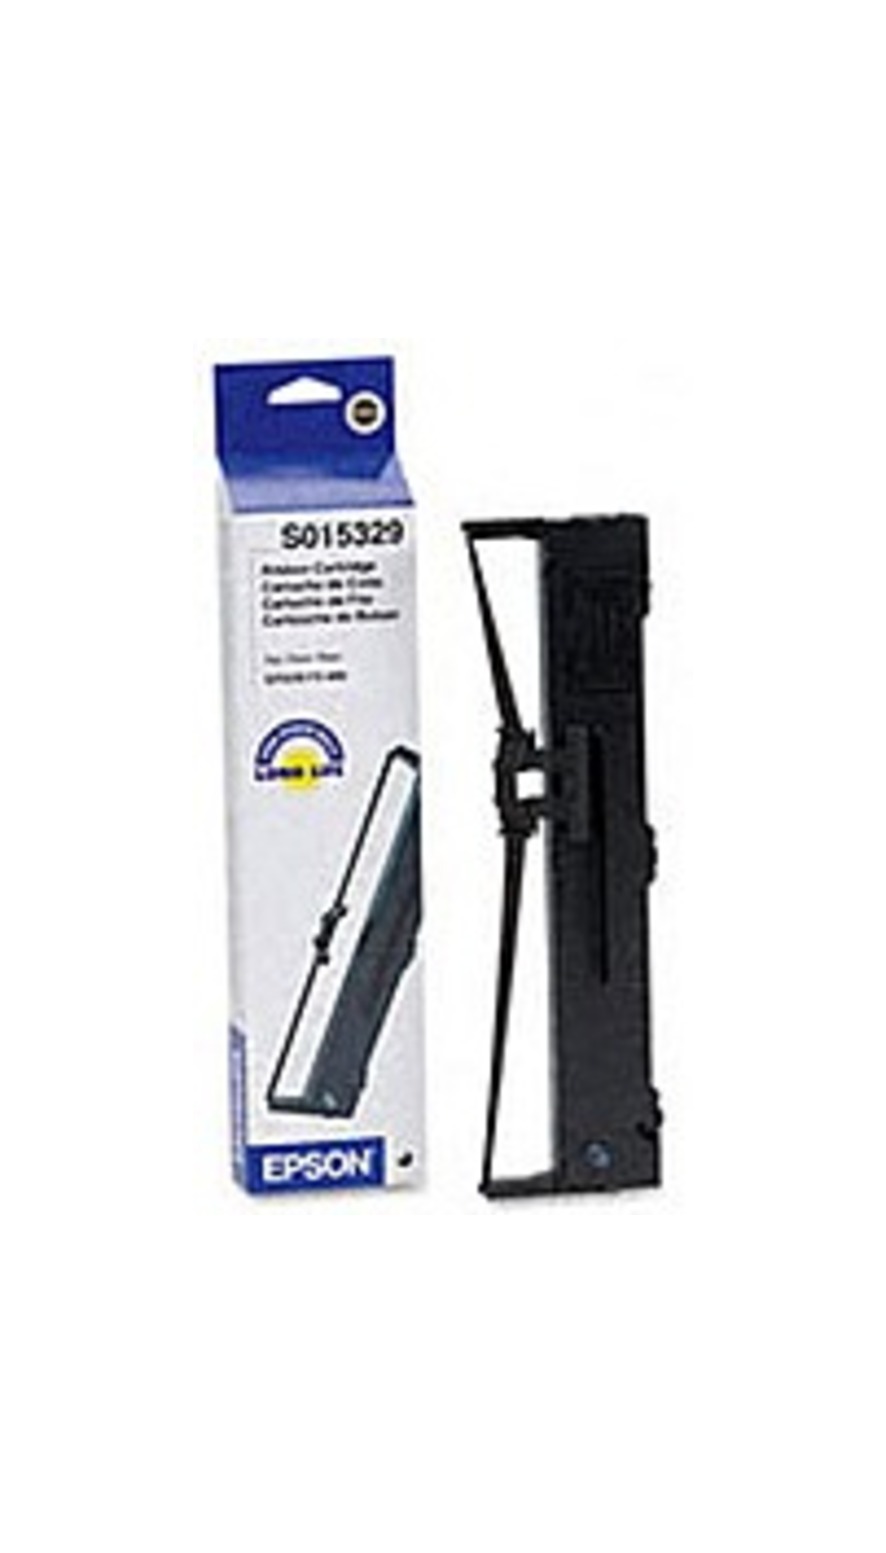 Epson S015329 Black Ribbon Cartridge for FX-890 Dot Matrix Printer